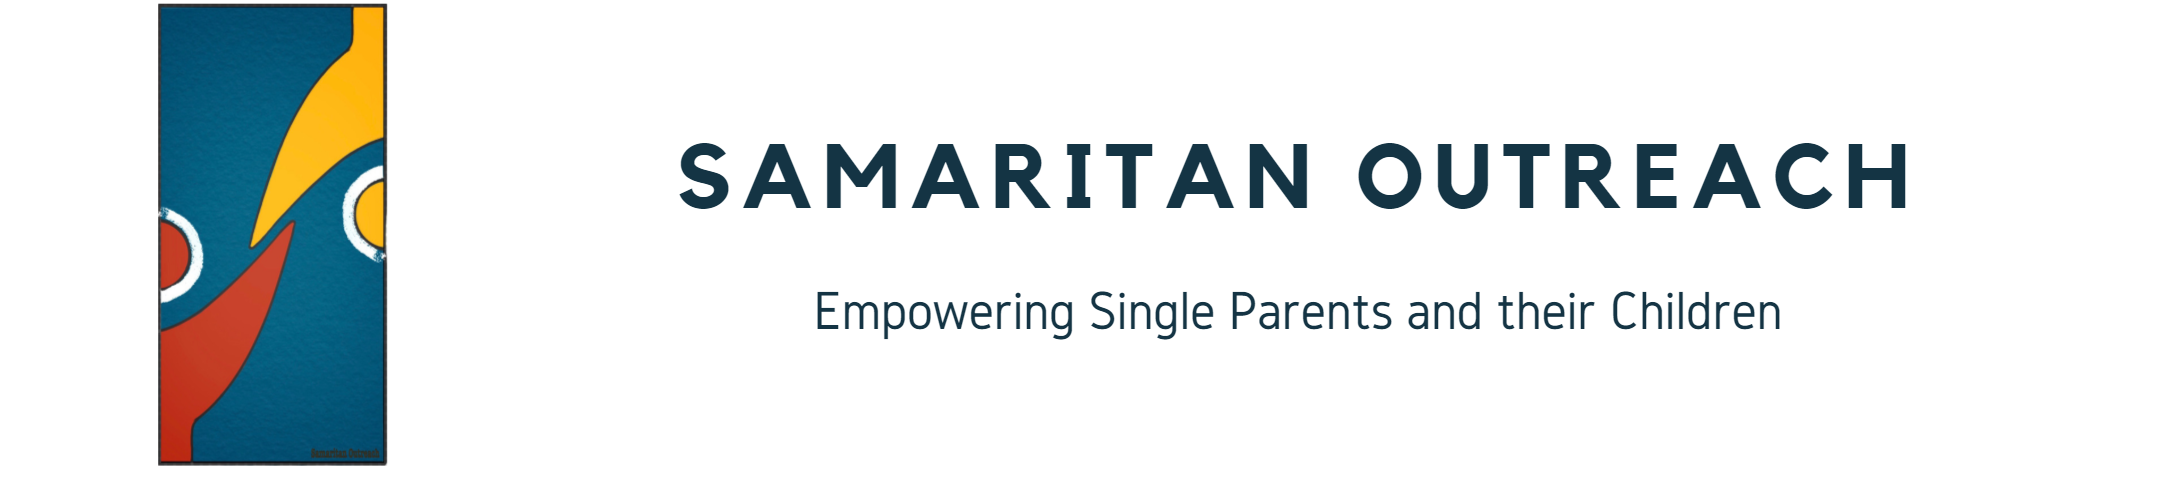 Samaritan Outreach logo